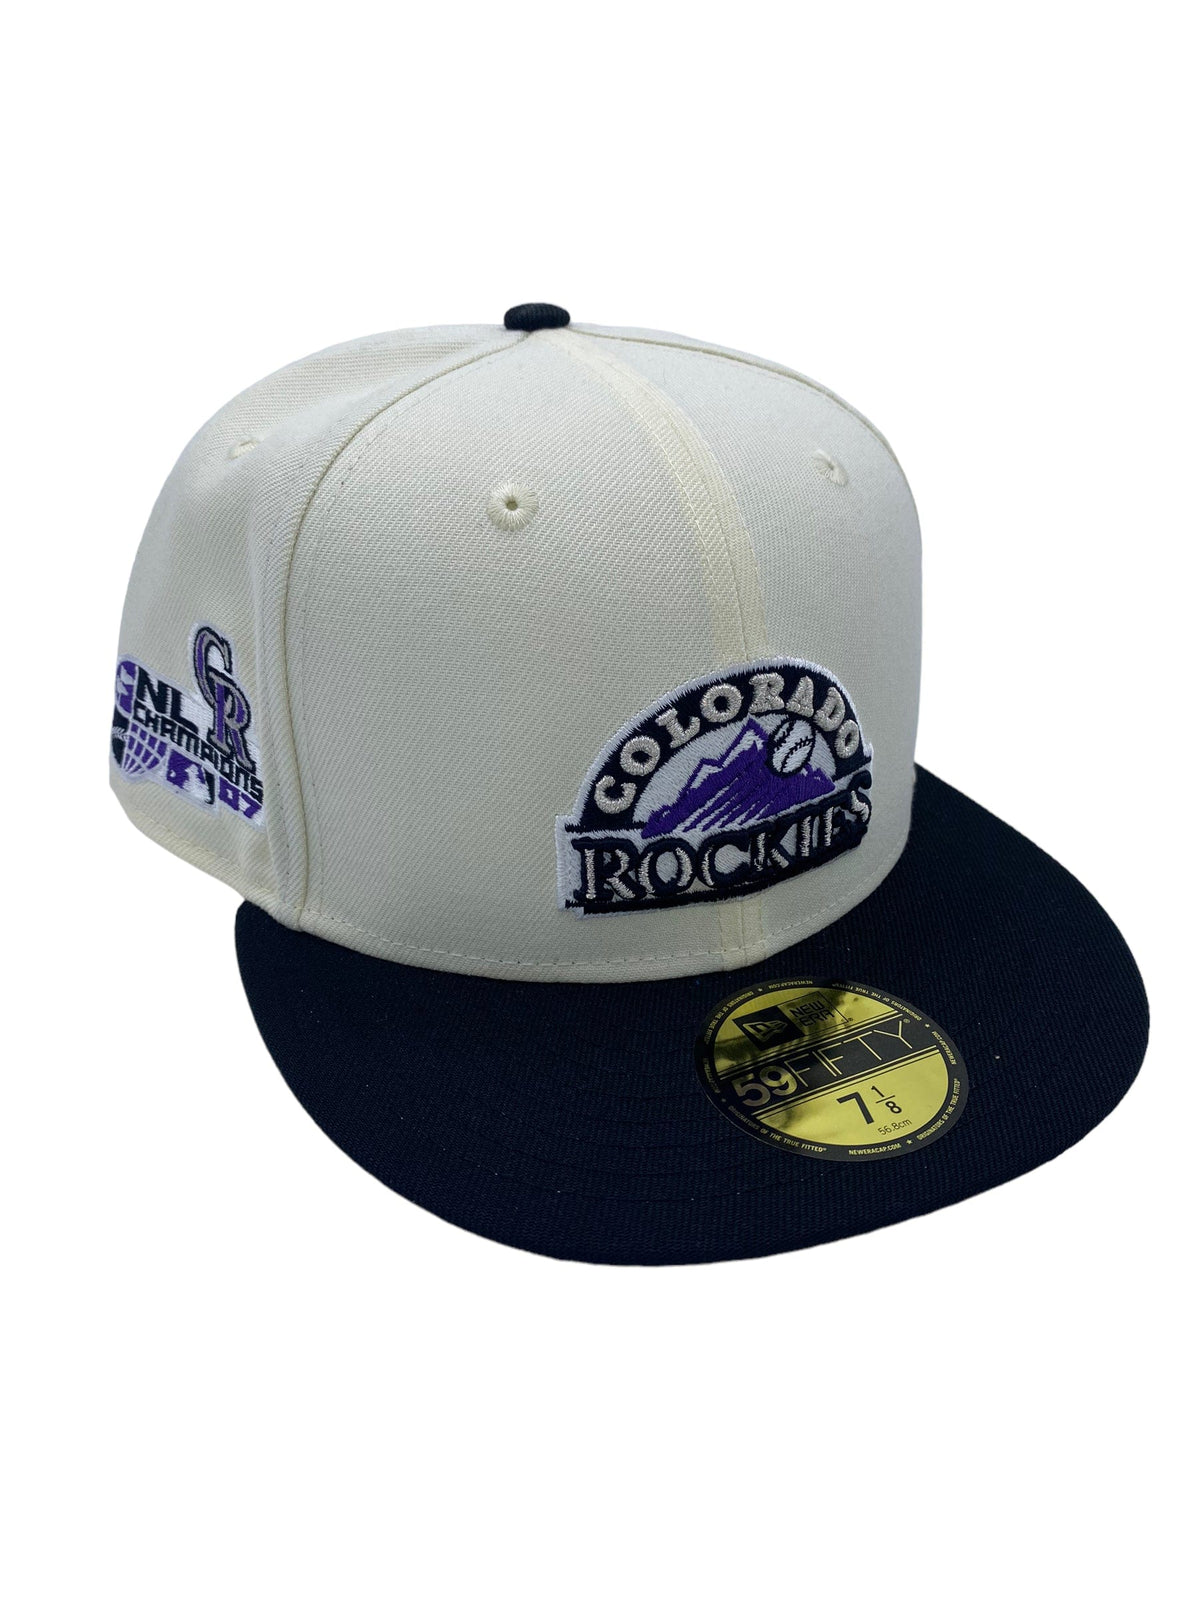 Las Vegas Raiders Fitted New Era 59FIFTY NL Logo Black Hat Cap